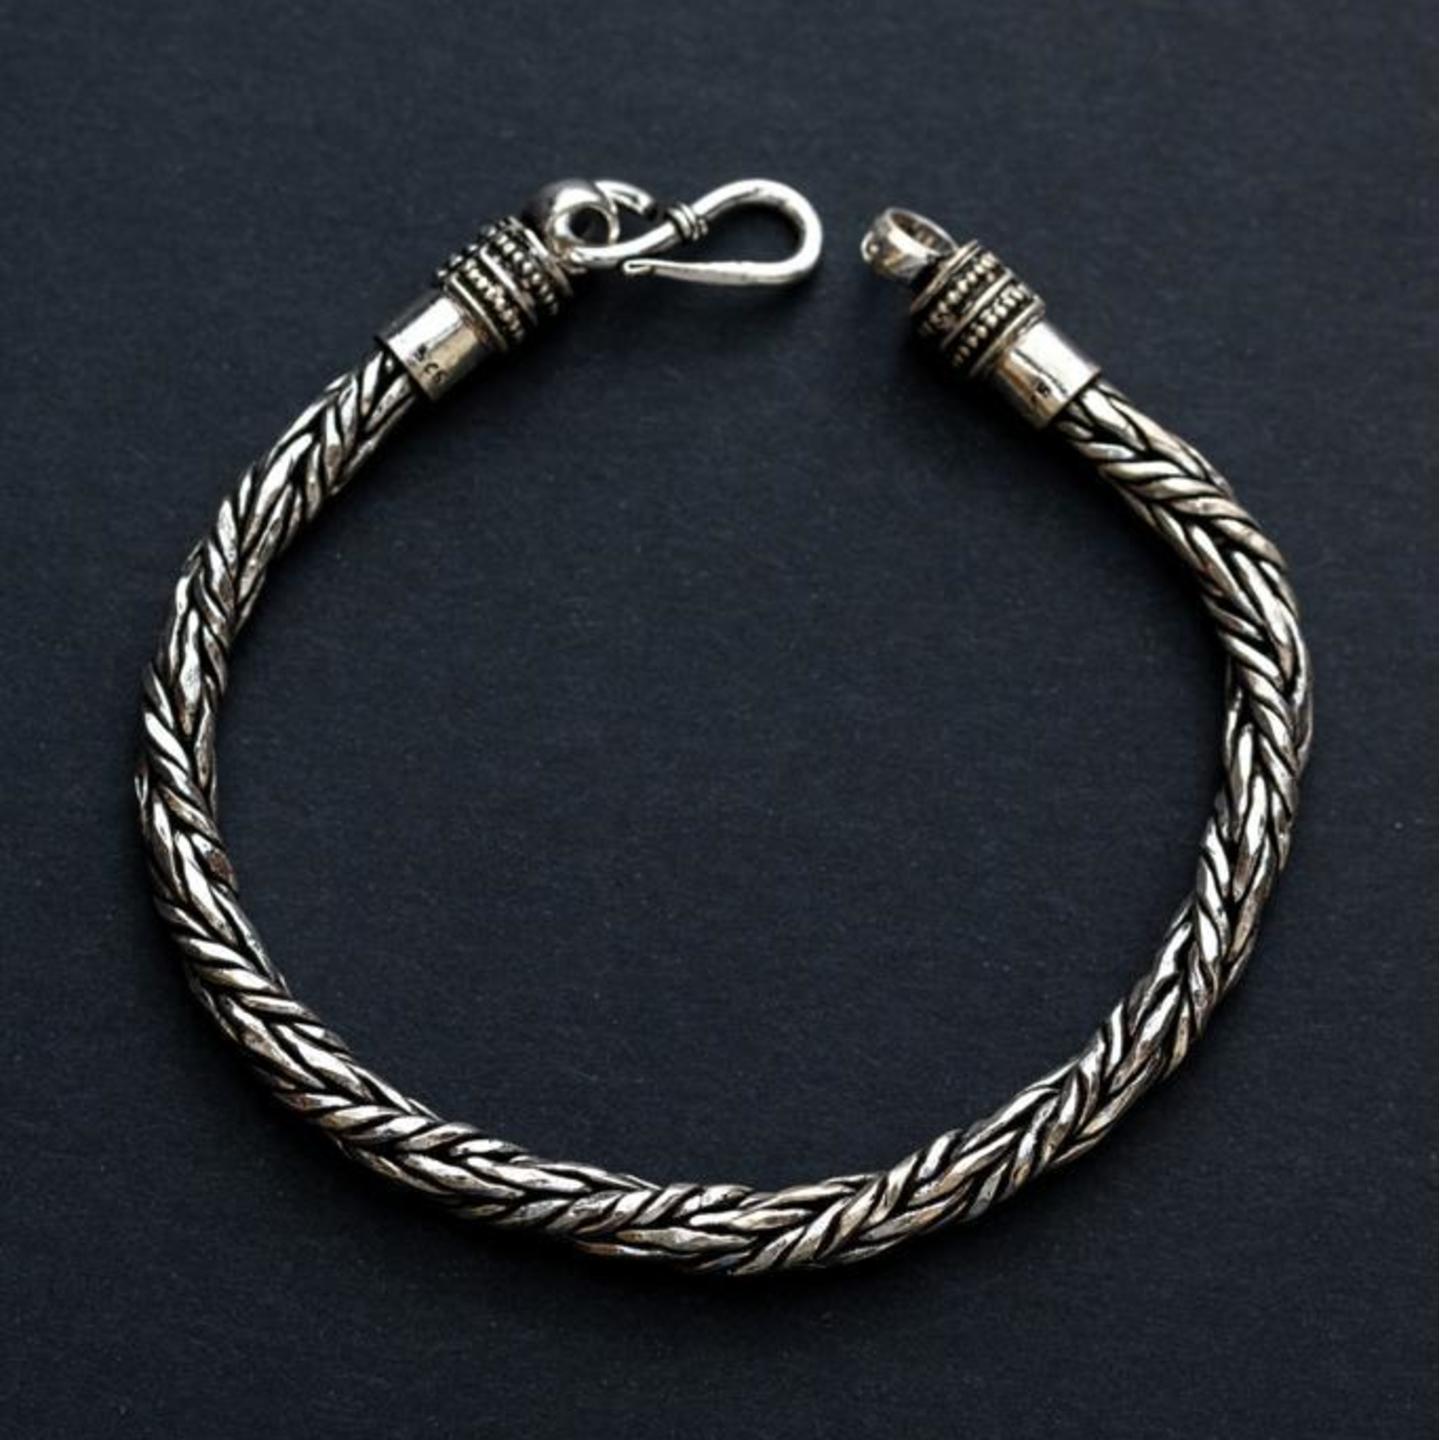 925 Solid Sterling Silver Handmade Bracelet - Length 8.25 Inches - Designer Mens Silver Bracelet - Oxidized Jewelry  36.5gm